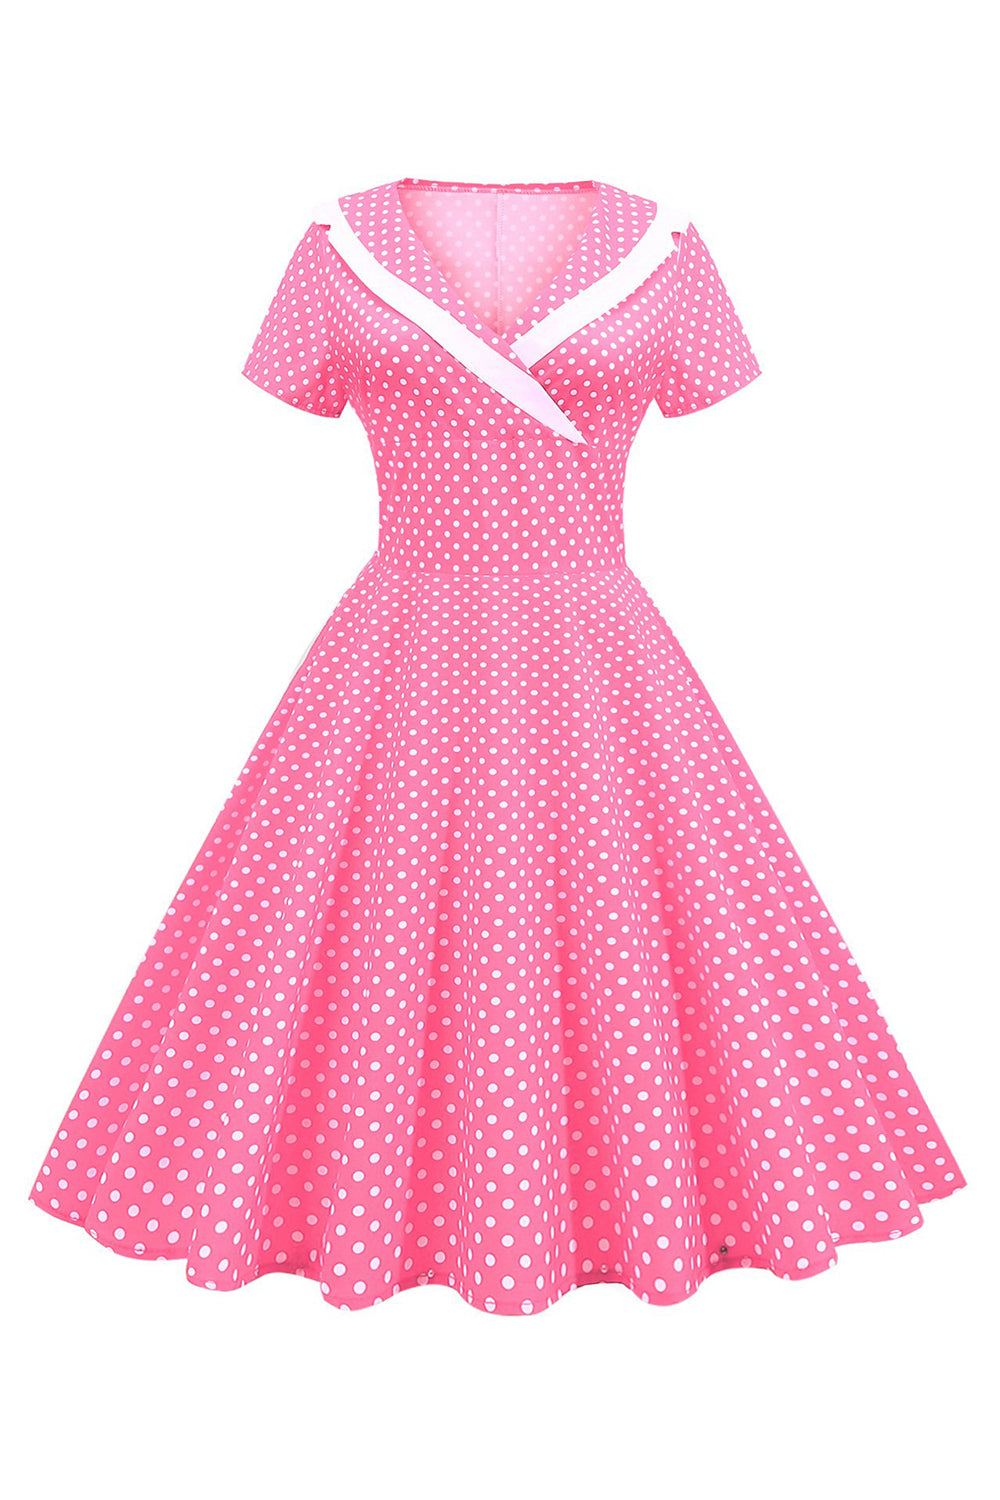 Pink Polka Dots V-Neck Short Sleeves 1950s Dress